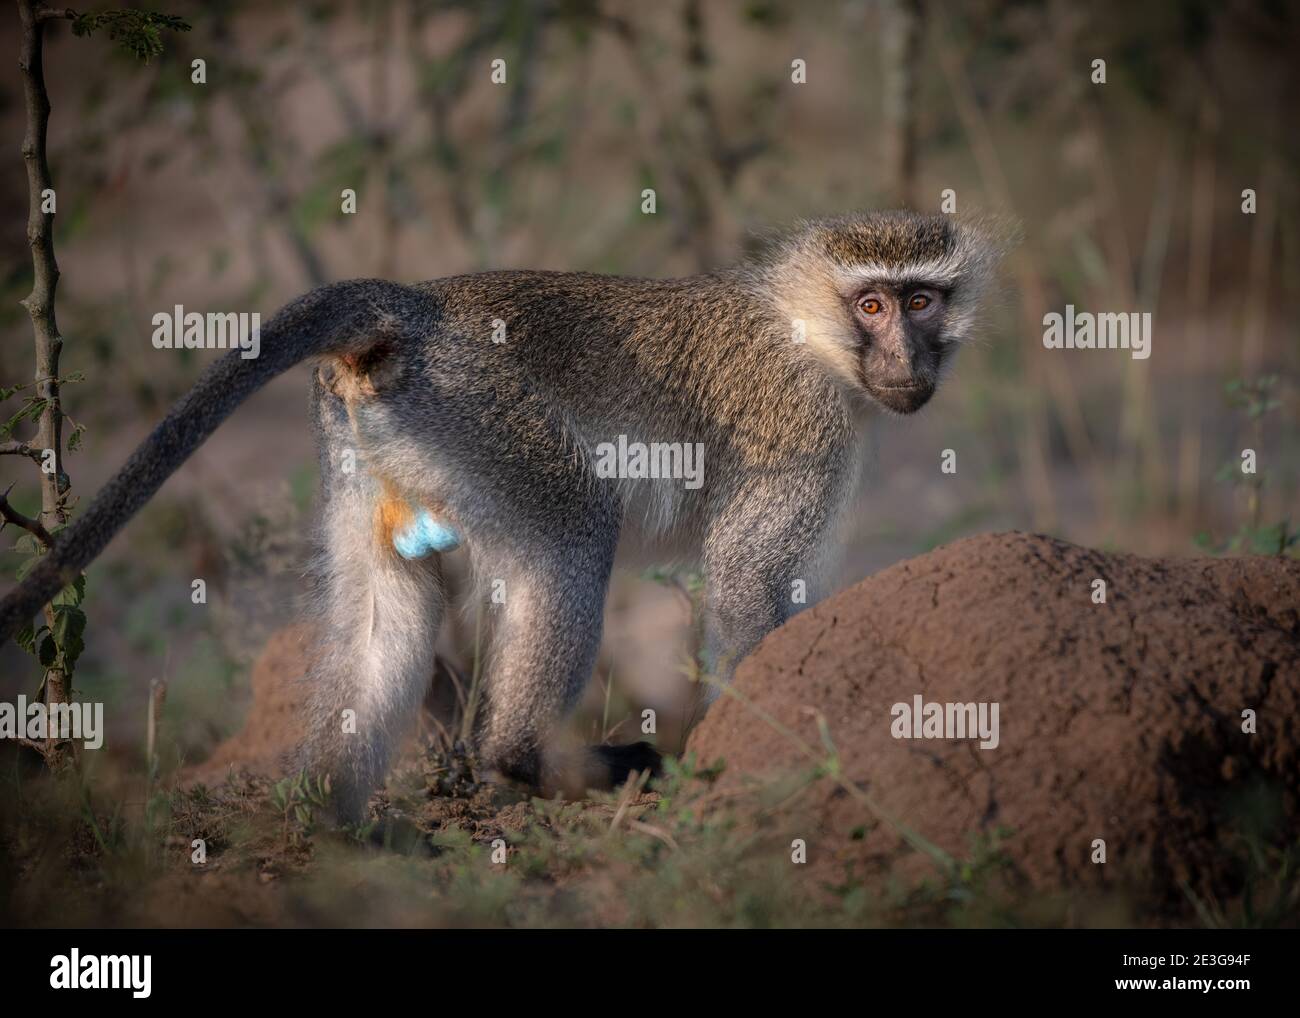 Scimmia selvatica Vervet in Africa. Foto Stock